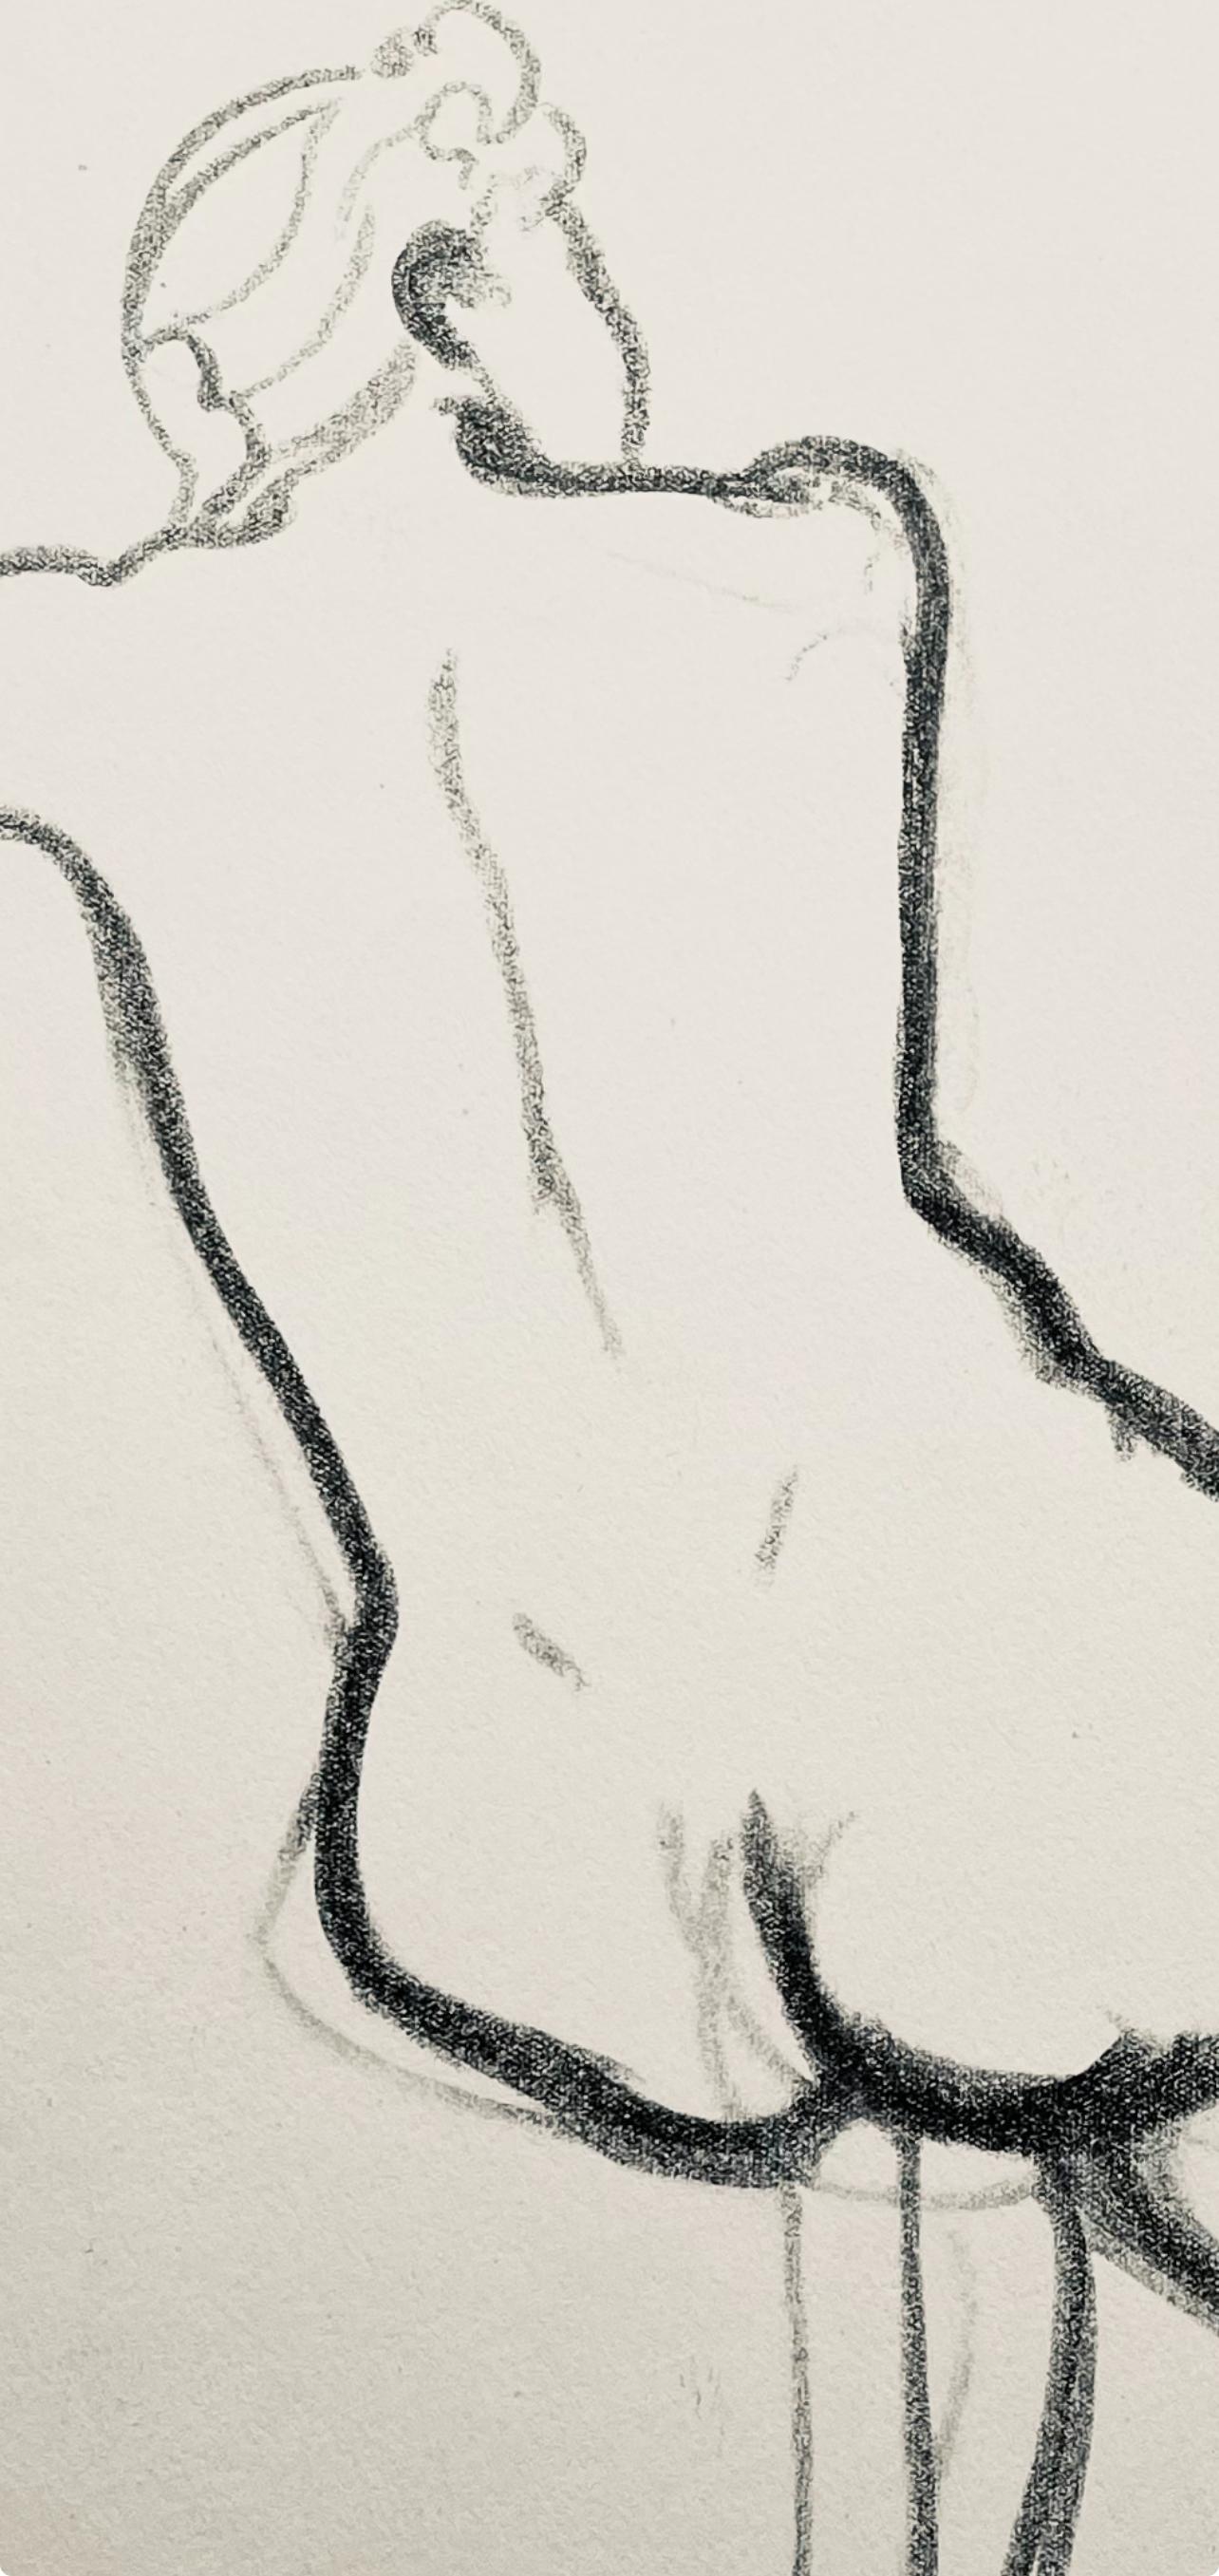 Lithograph on wove paper. Inscription: Unsigned and unnumbered. Good condition. Notes: From Derrière le miroir, N° 94-95, published by Aimé Maeght, Éditeur, Paris; printed by Éditions Pierre à Feu, Galerie Maeght, Paris, February-March 1957.